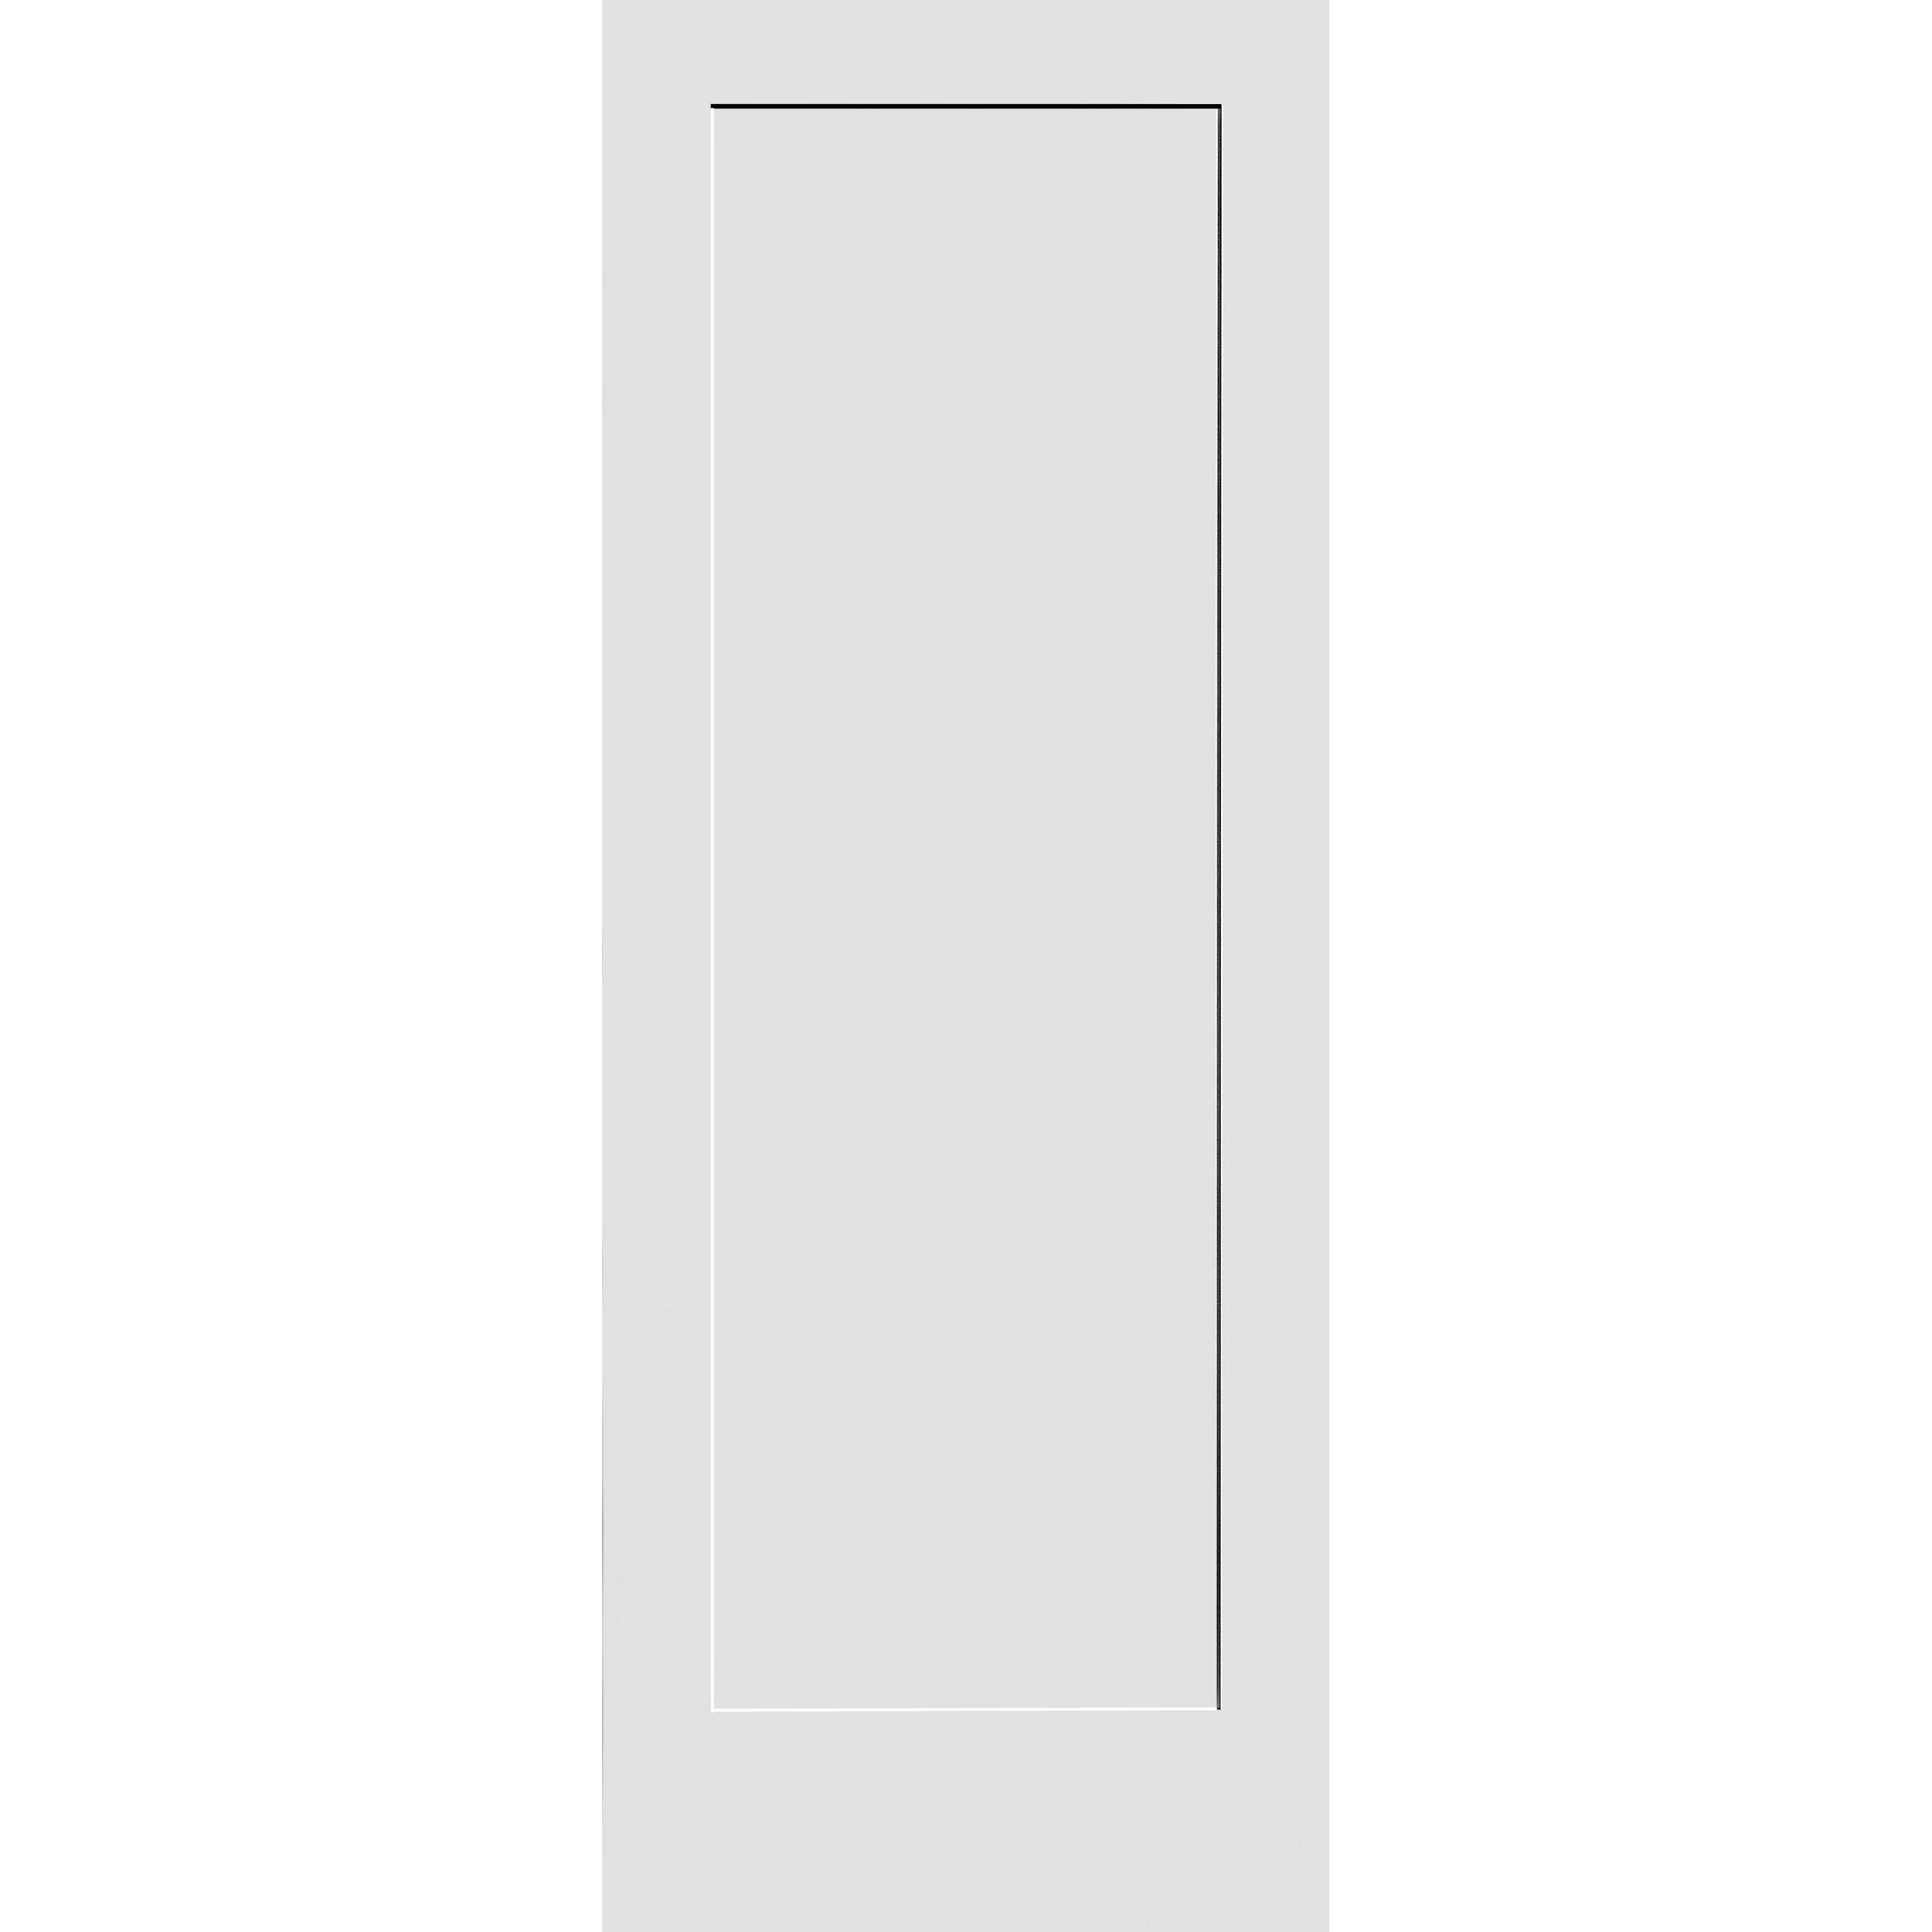 32X84 #8401 MDF PRIMED SHAKER PANEL INTERIOR DOOR 1-3/4 THICKNESS